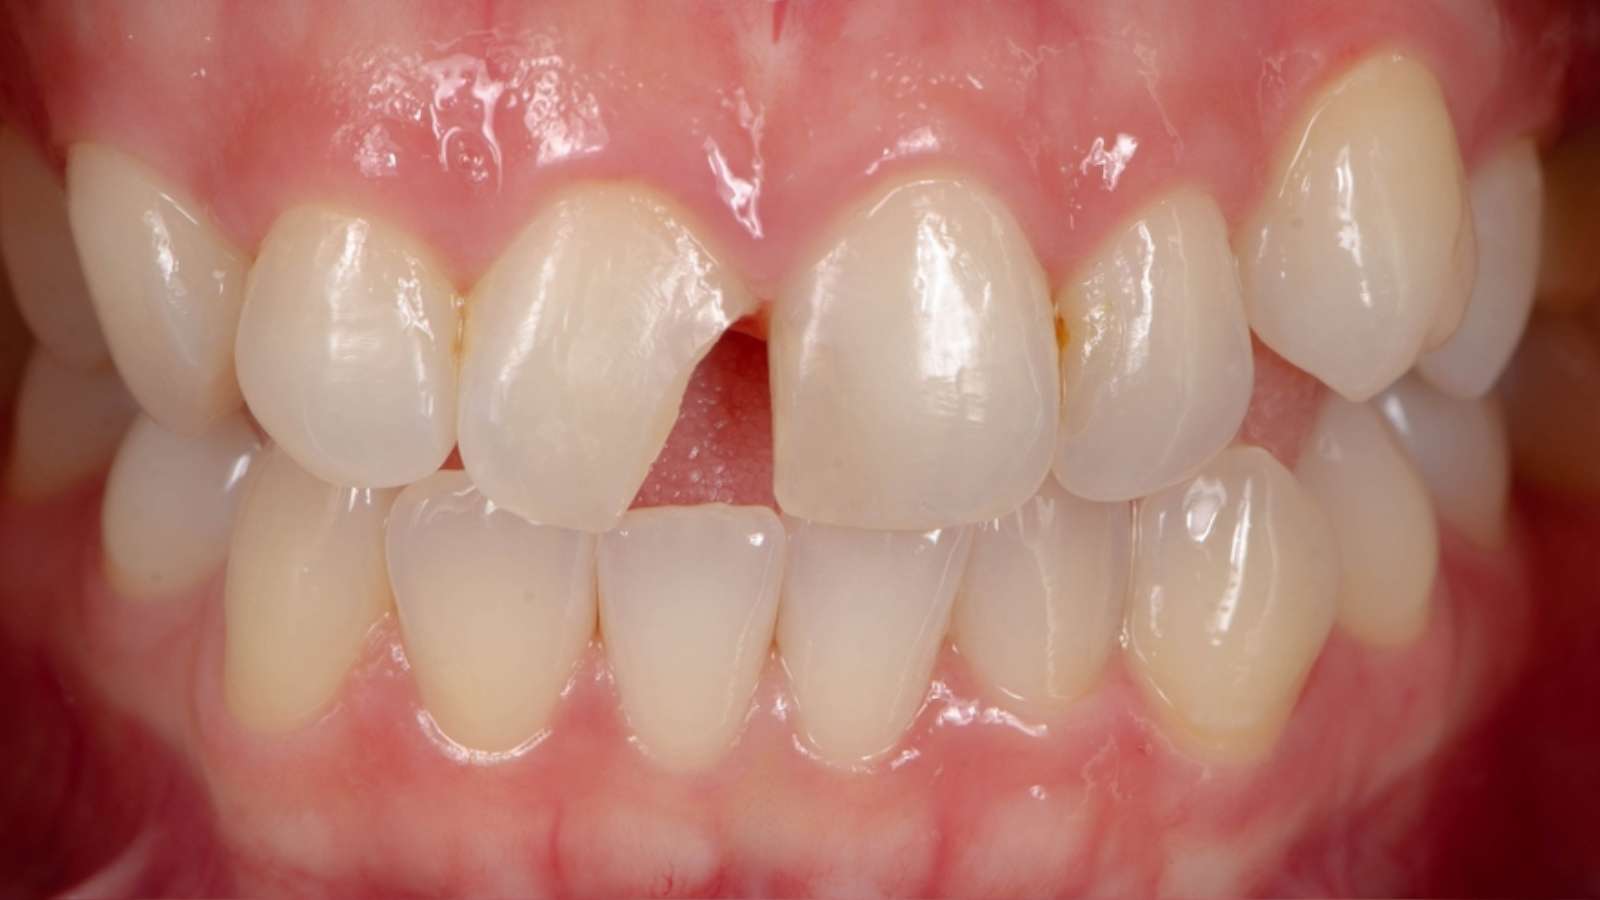 types of cavities - class 4 cavity